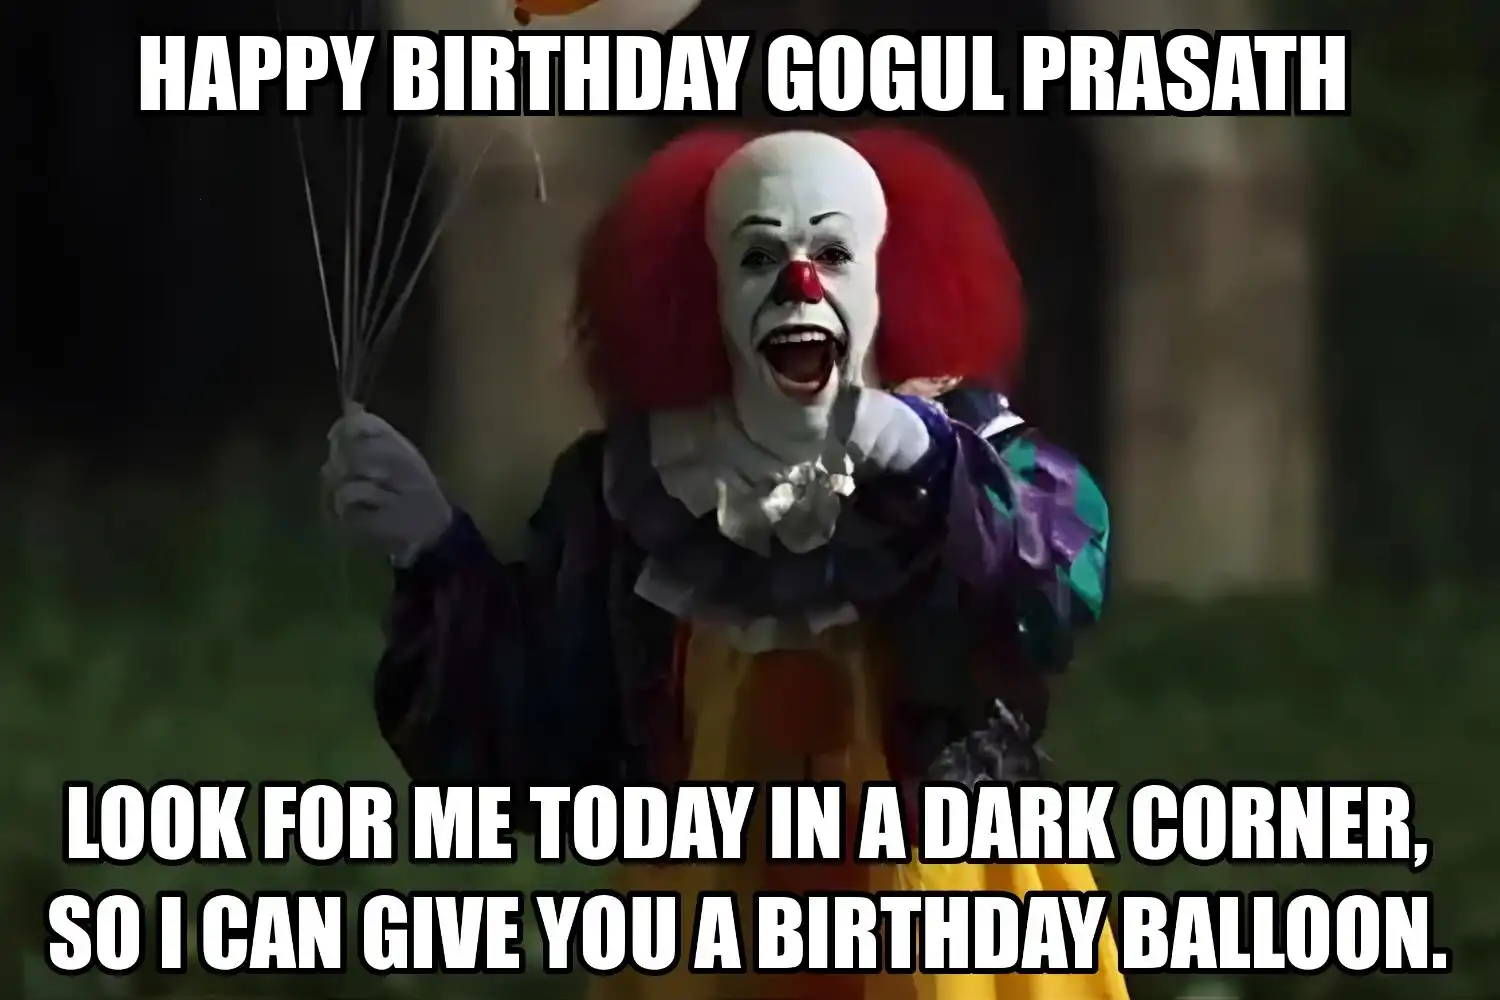 Happy Birthday Gogul prasath I Can Give You A Balloon Meme